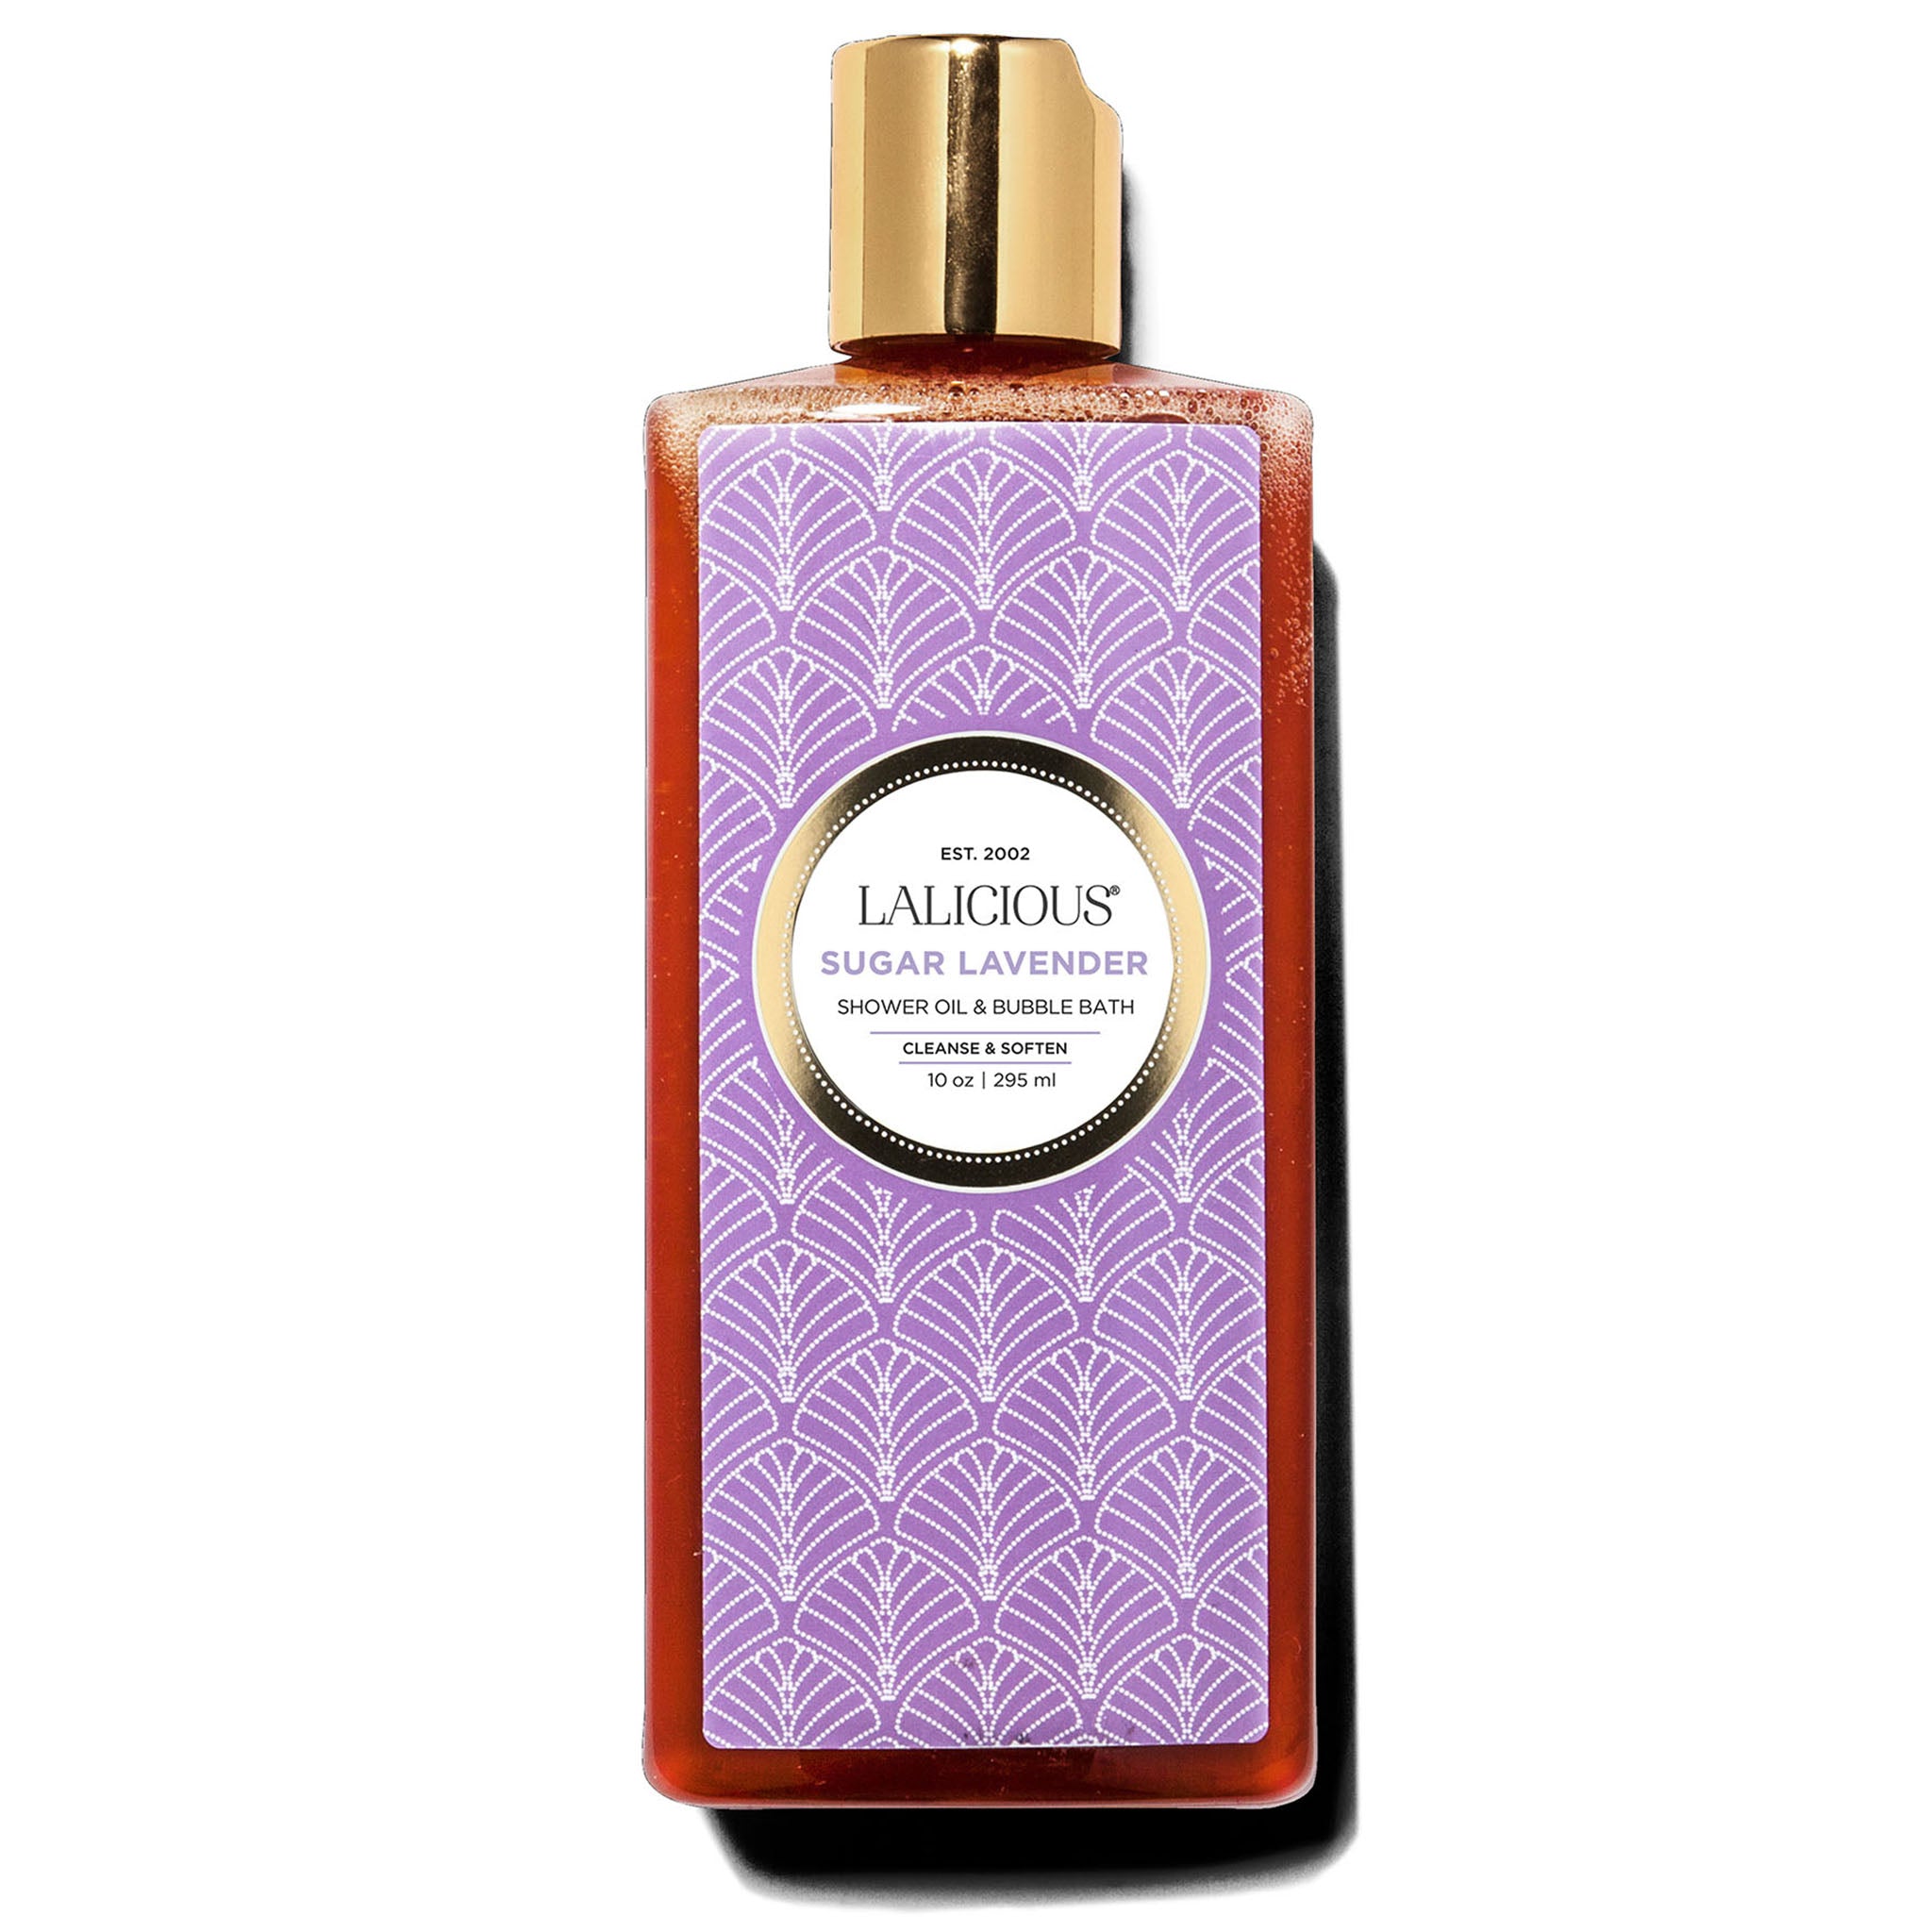 Lalicious Sugar Lavender Shower Oil & Bubble Bath